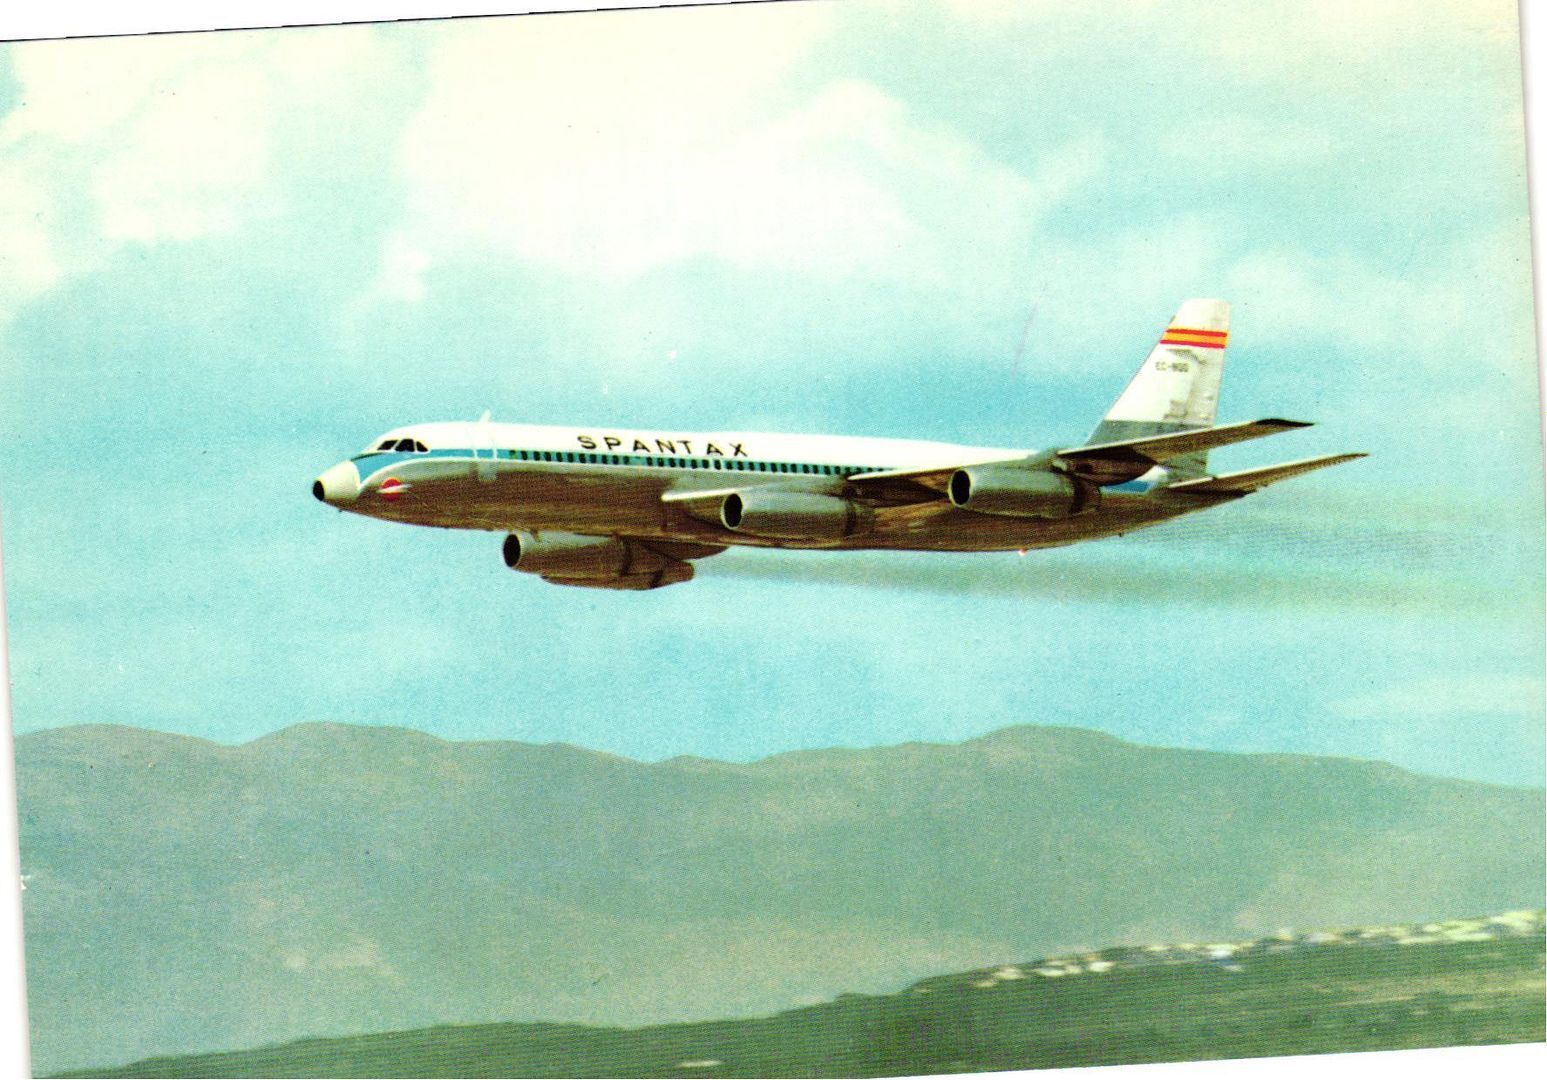 Vintage Postcard 4x6- Coronado airplane flying for Spantax